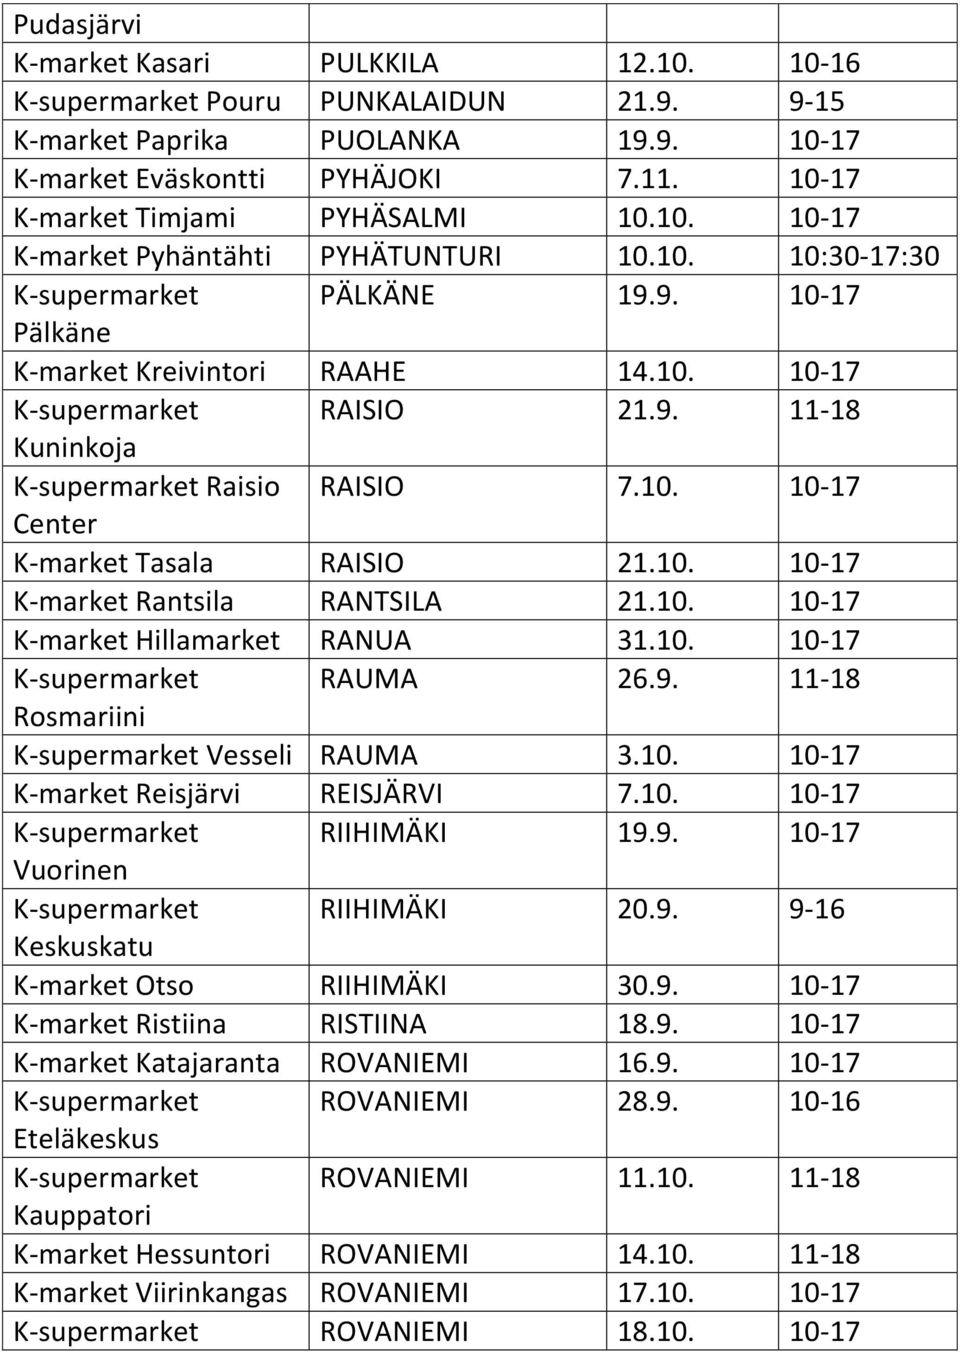 9. 11-18 Kuninkoja K-supermarket Raisio RAISIO 7.10. 10-17 Center K-market Tasala RAISIO 21.10. 10-17 K-market Rantsila RANTSILA 21.10. 10-17 K-market Hillamarket RANUA 31.10. 10-17 K-supermarket RAUMA 26.